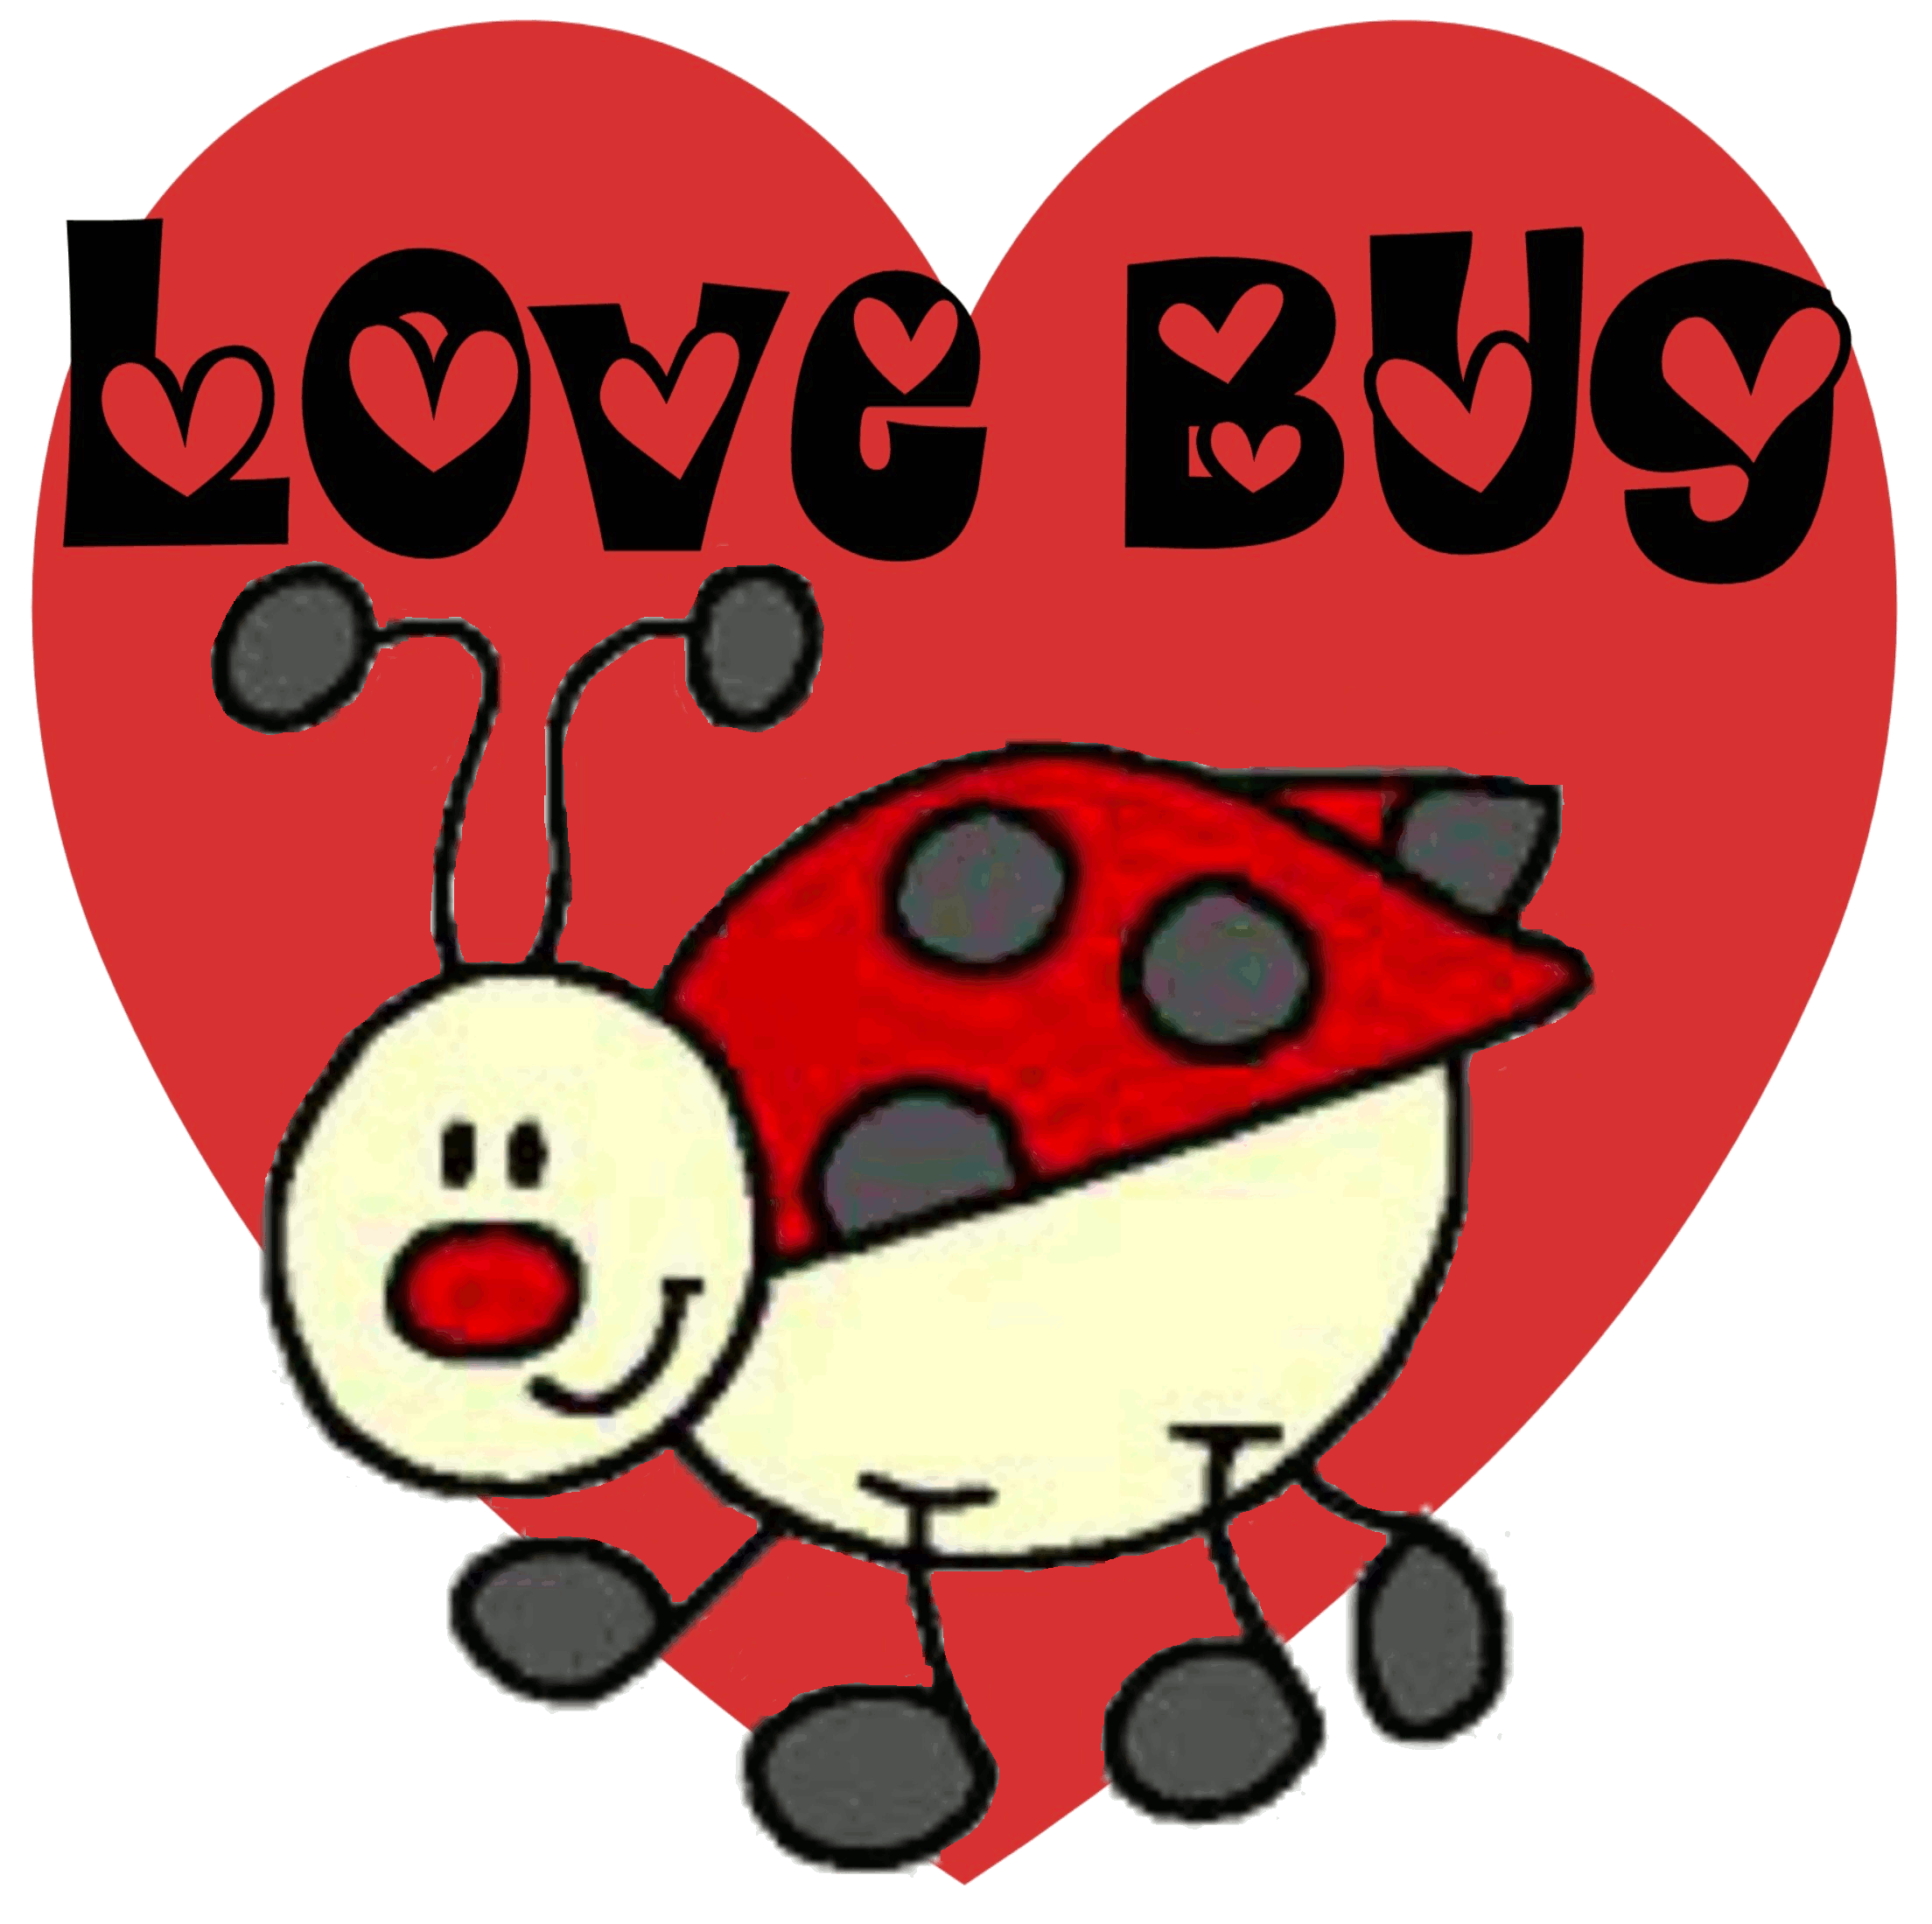 Love bugs clipart » Clipart Portal.